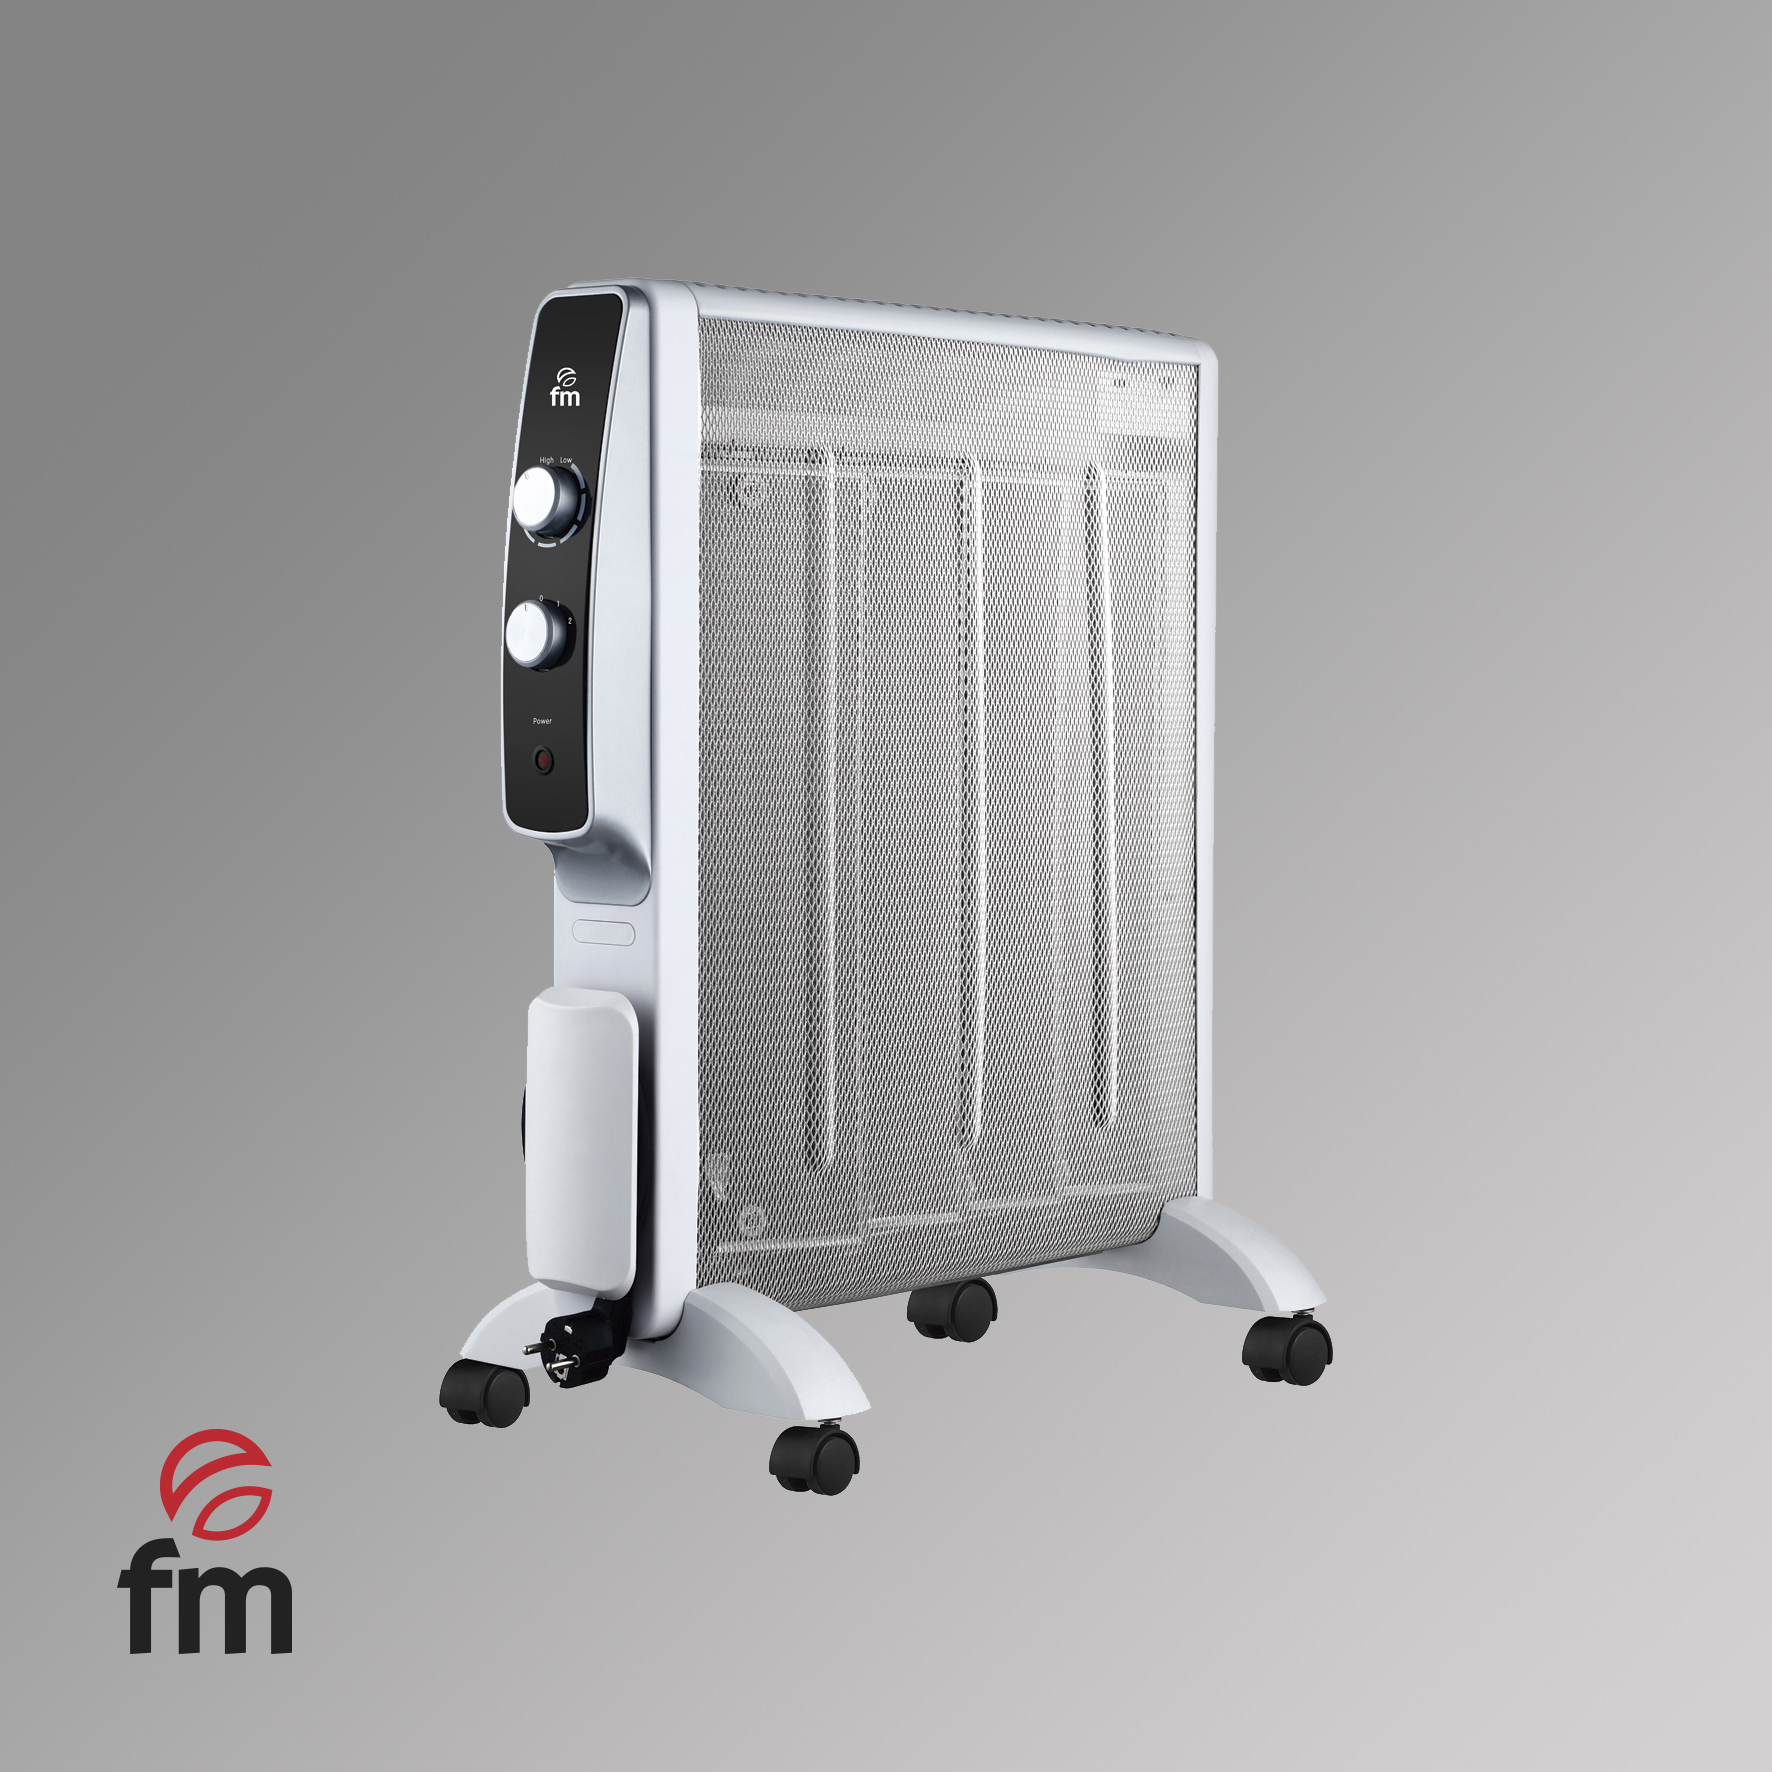 Chollo de hoy  Fm rm15 mica radiador (mica) 1500w calefactores  8427561006418